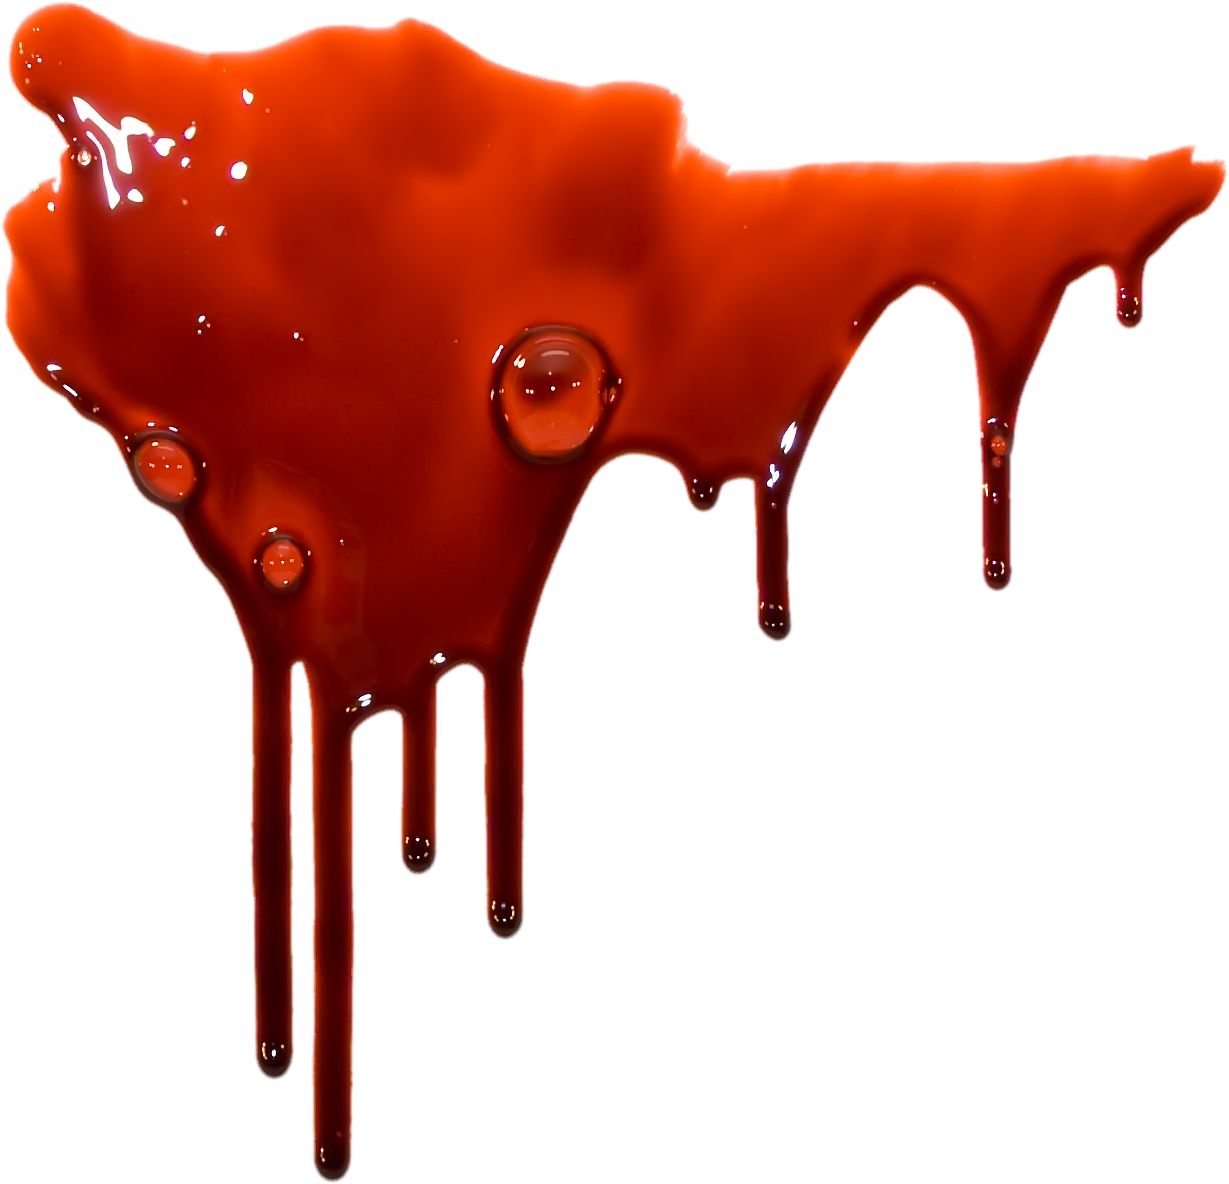 Blood Drip PNG HD Quality